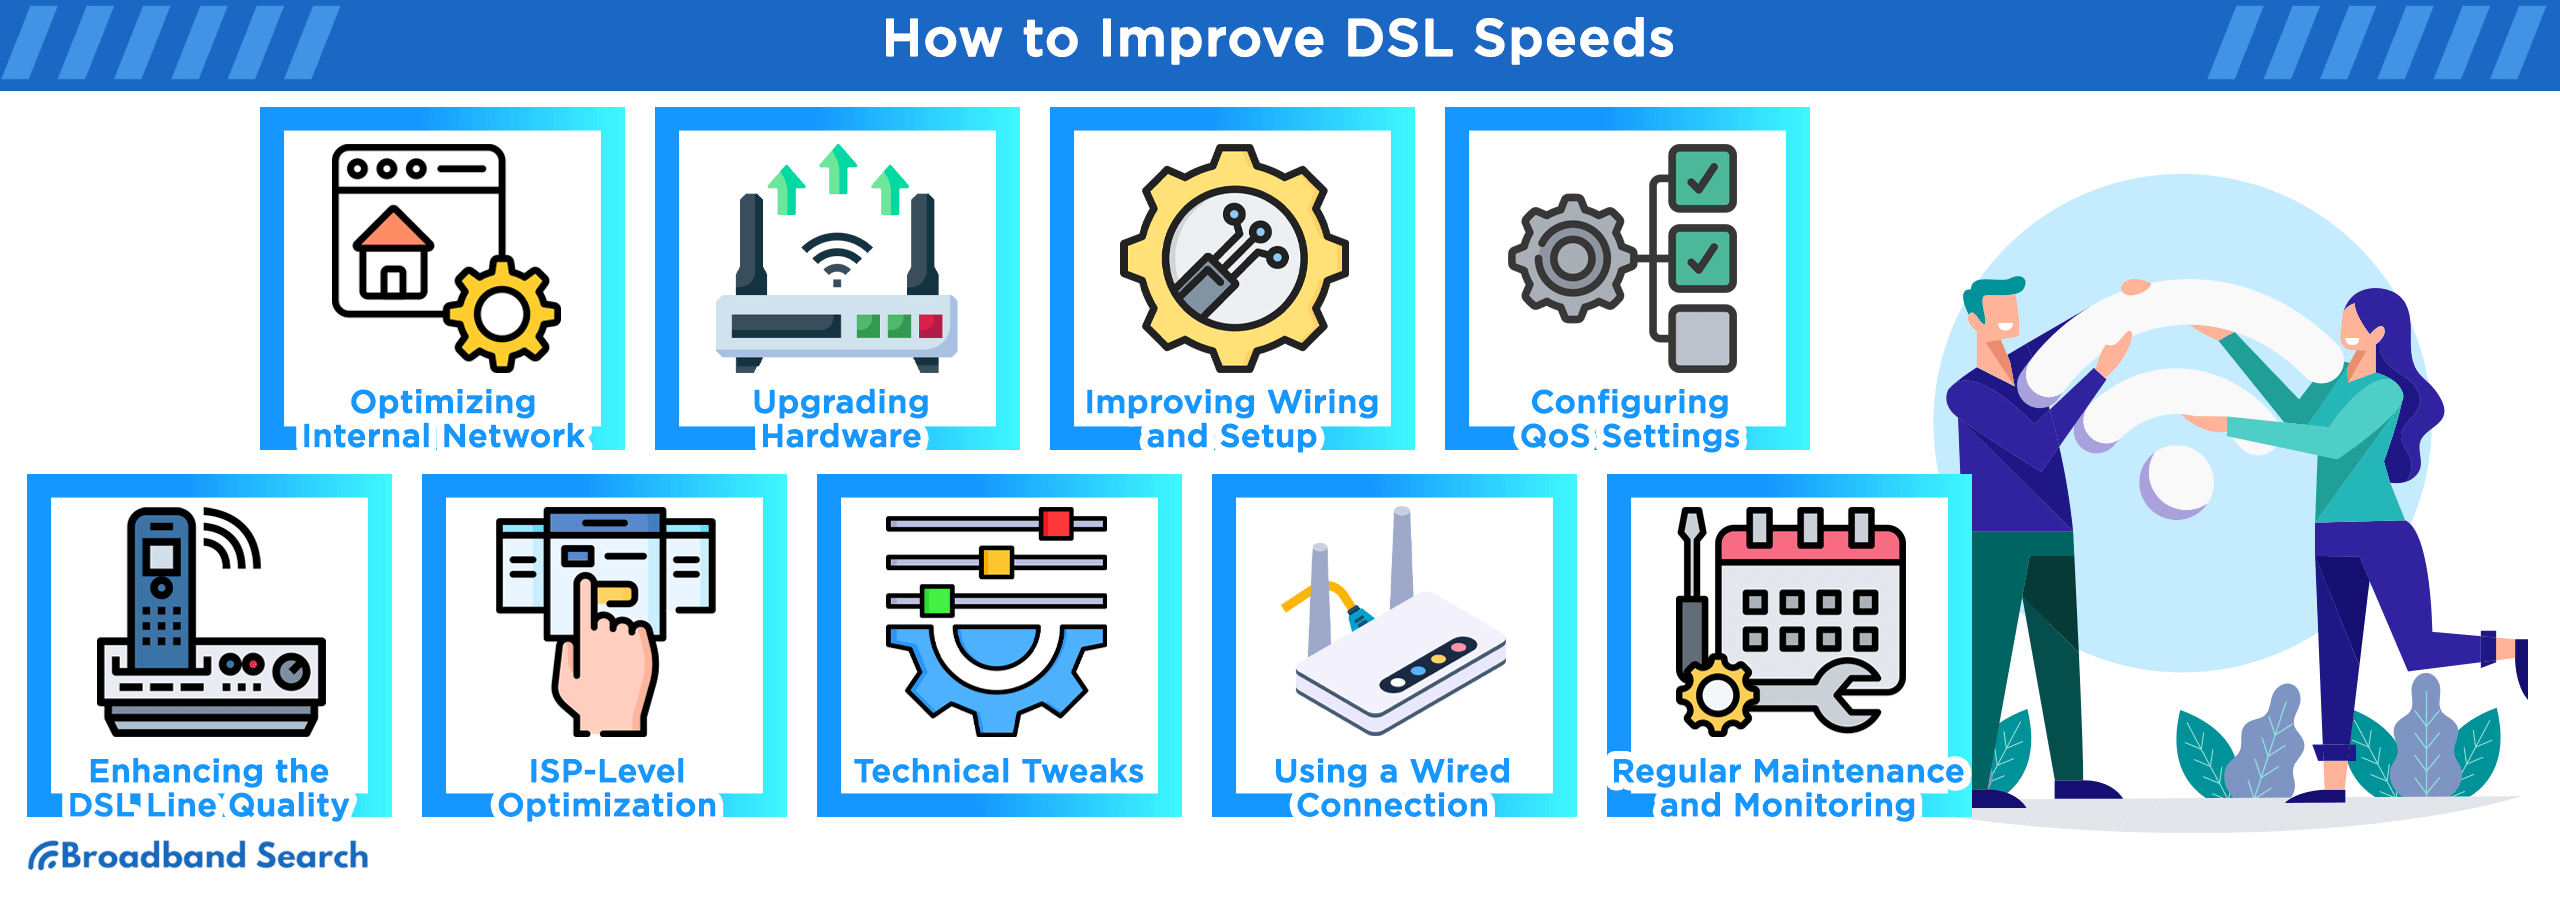 How to Improve DSL Speeds